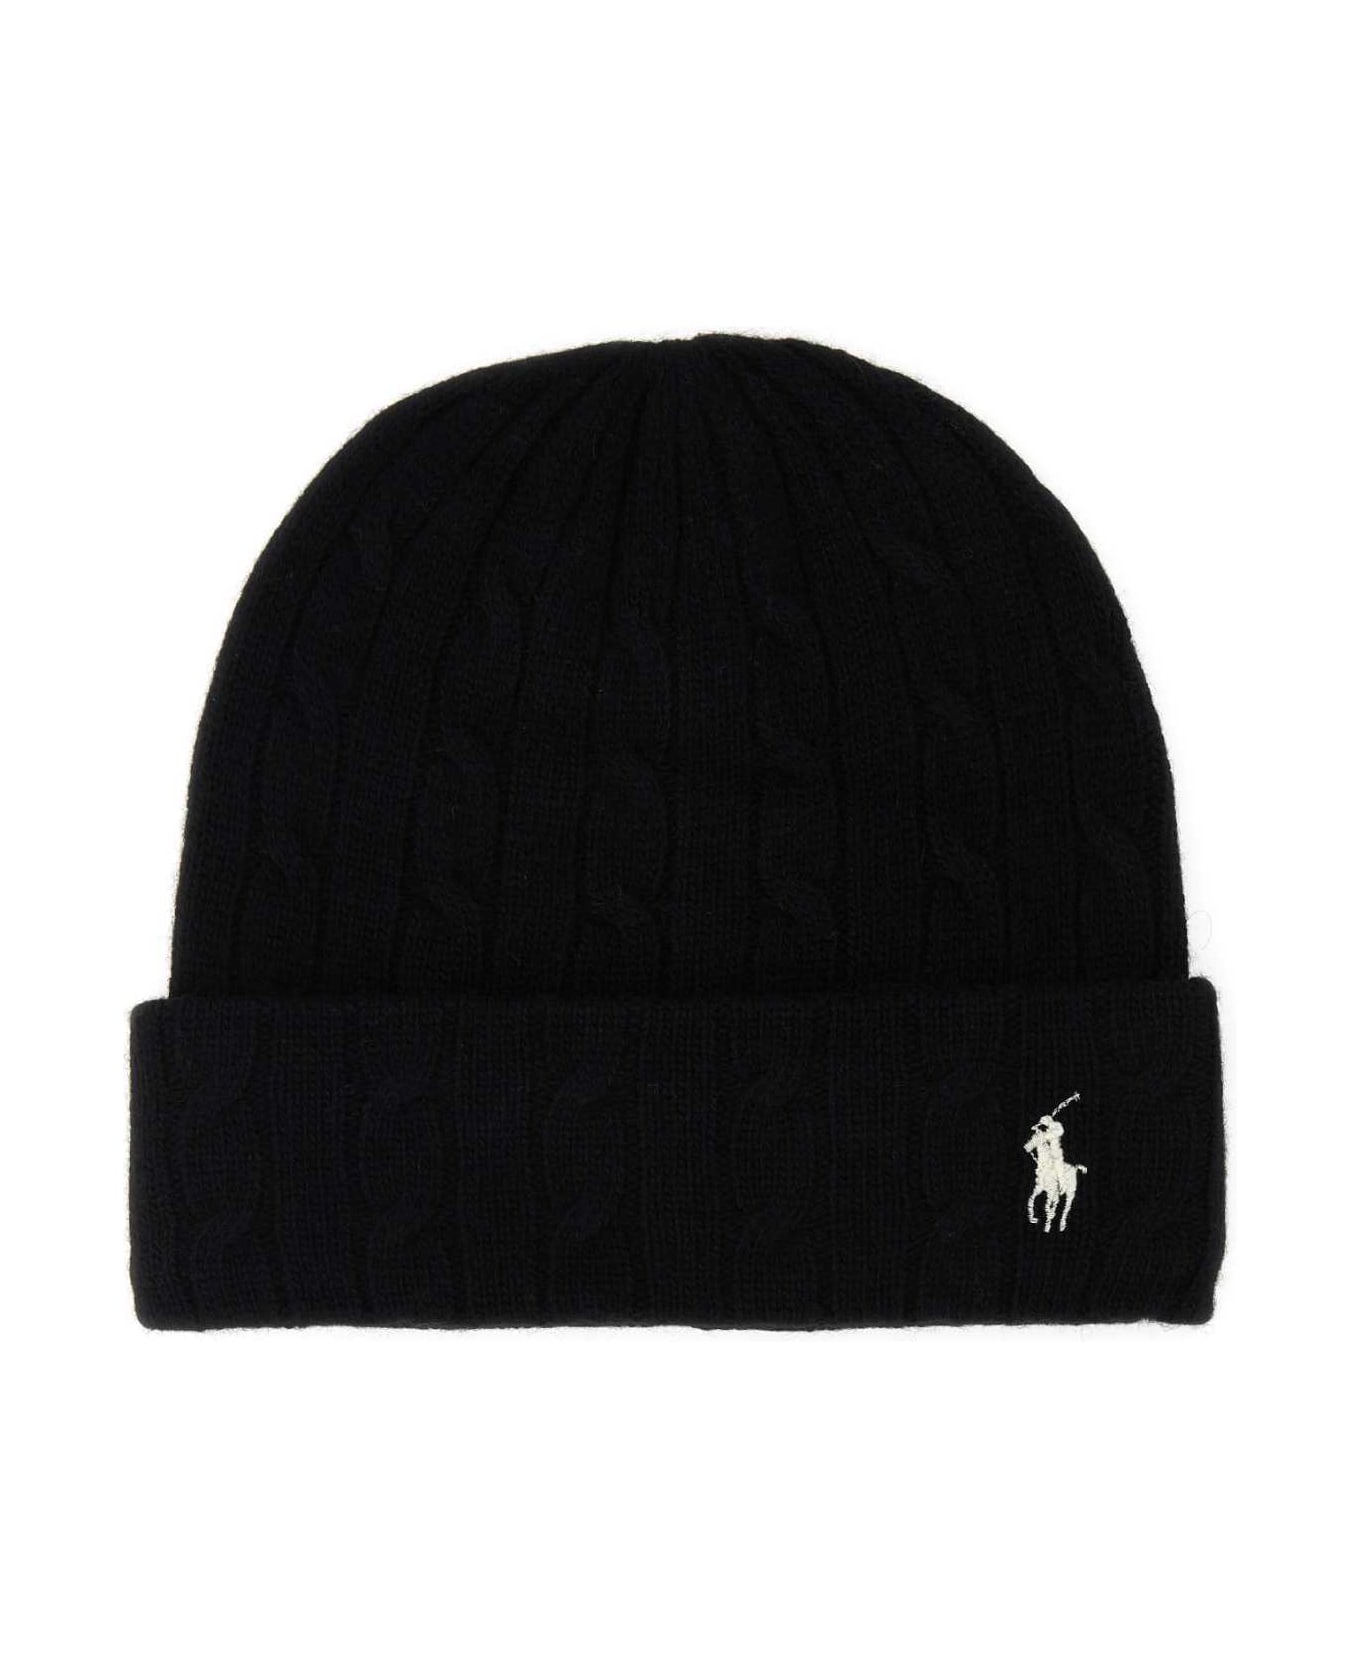 Polo Ralph Lauren Black Wool Blend Beanie Hat - 001 帽子